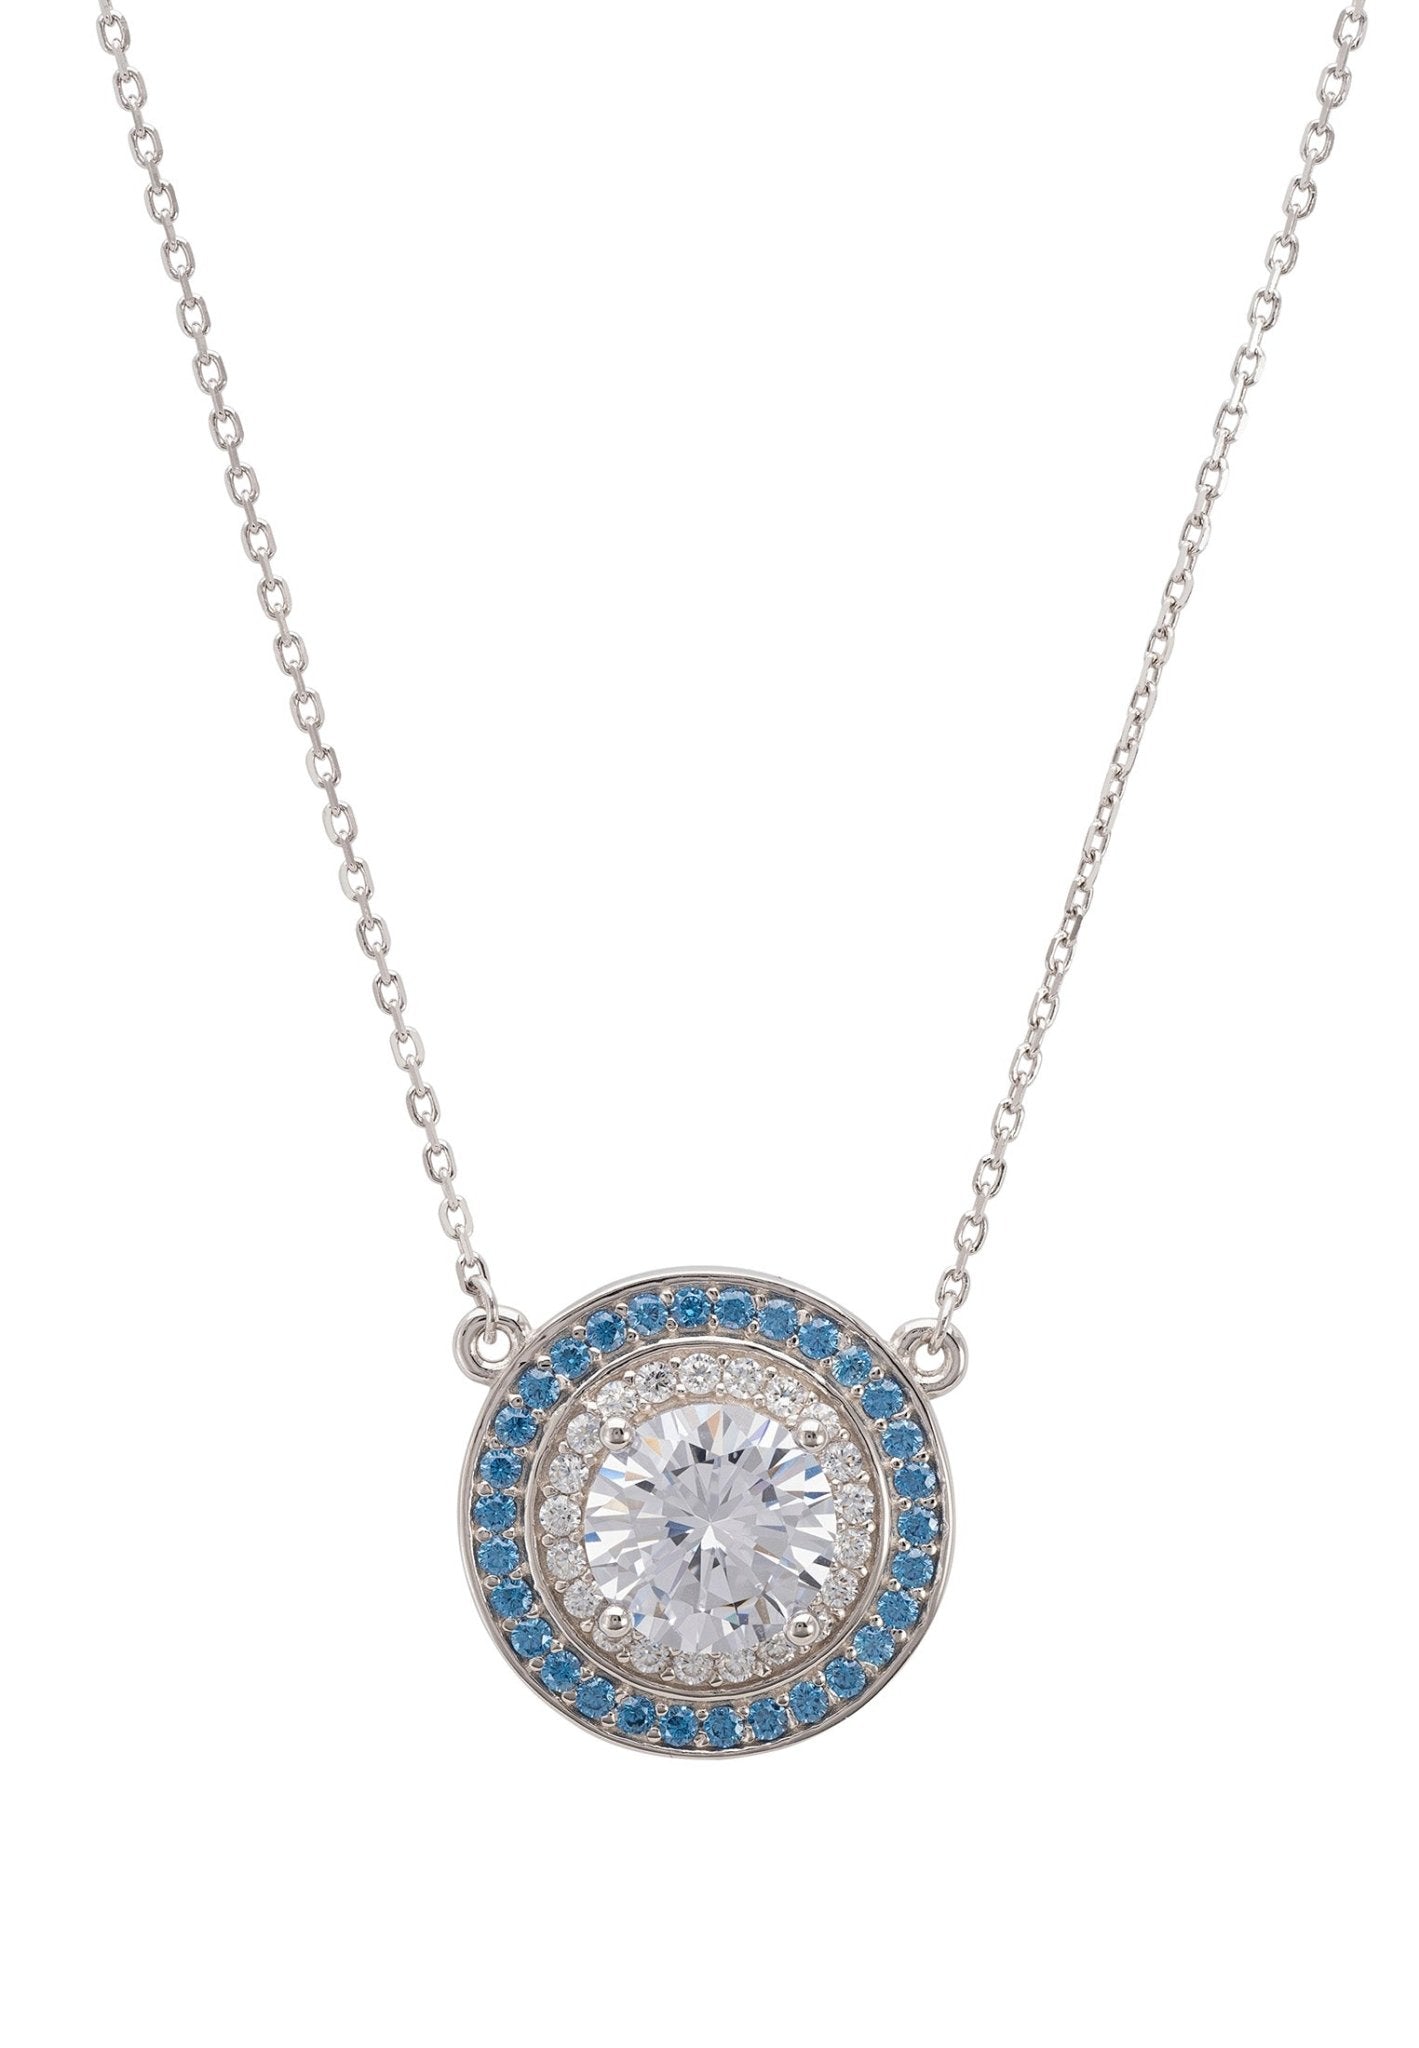 Balmoral Pendant Necklace Topaz Blue Cz Silver - LATELITA Necklaces